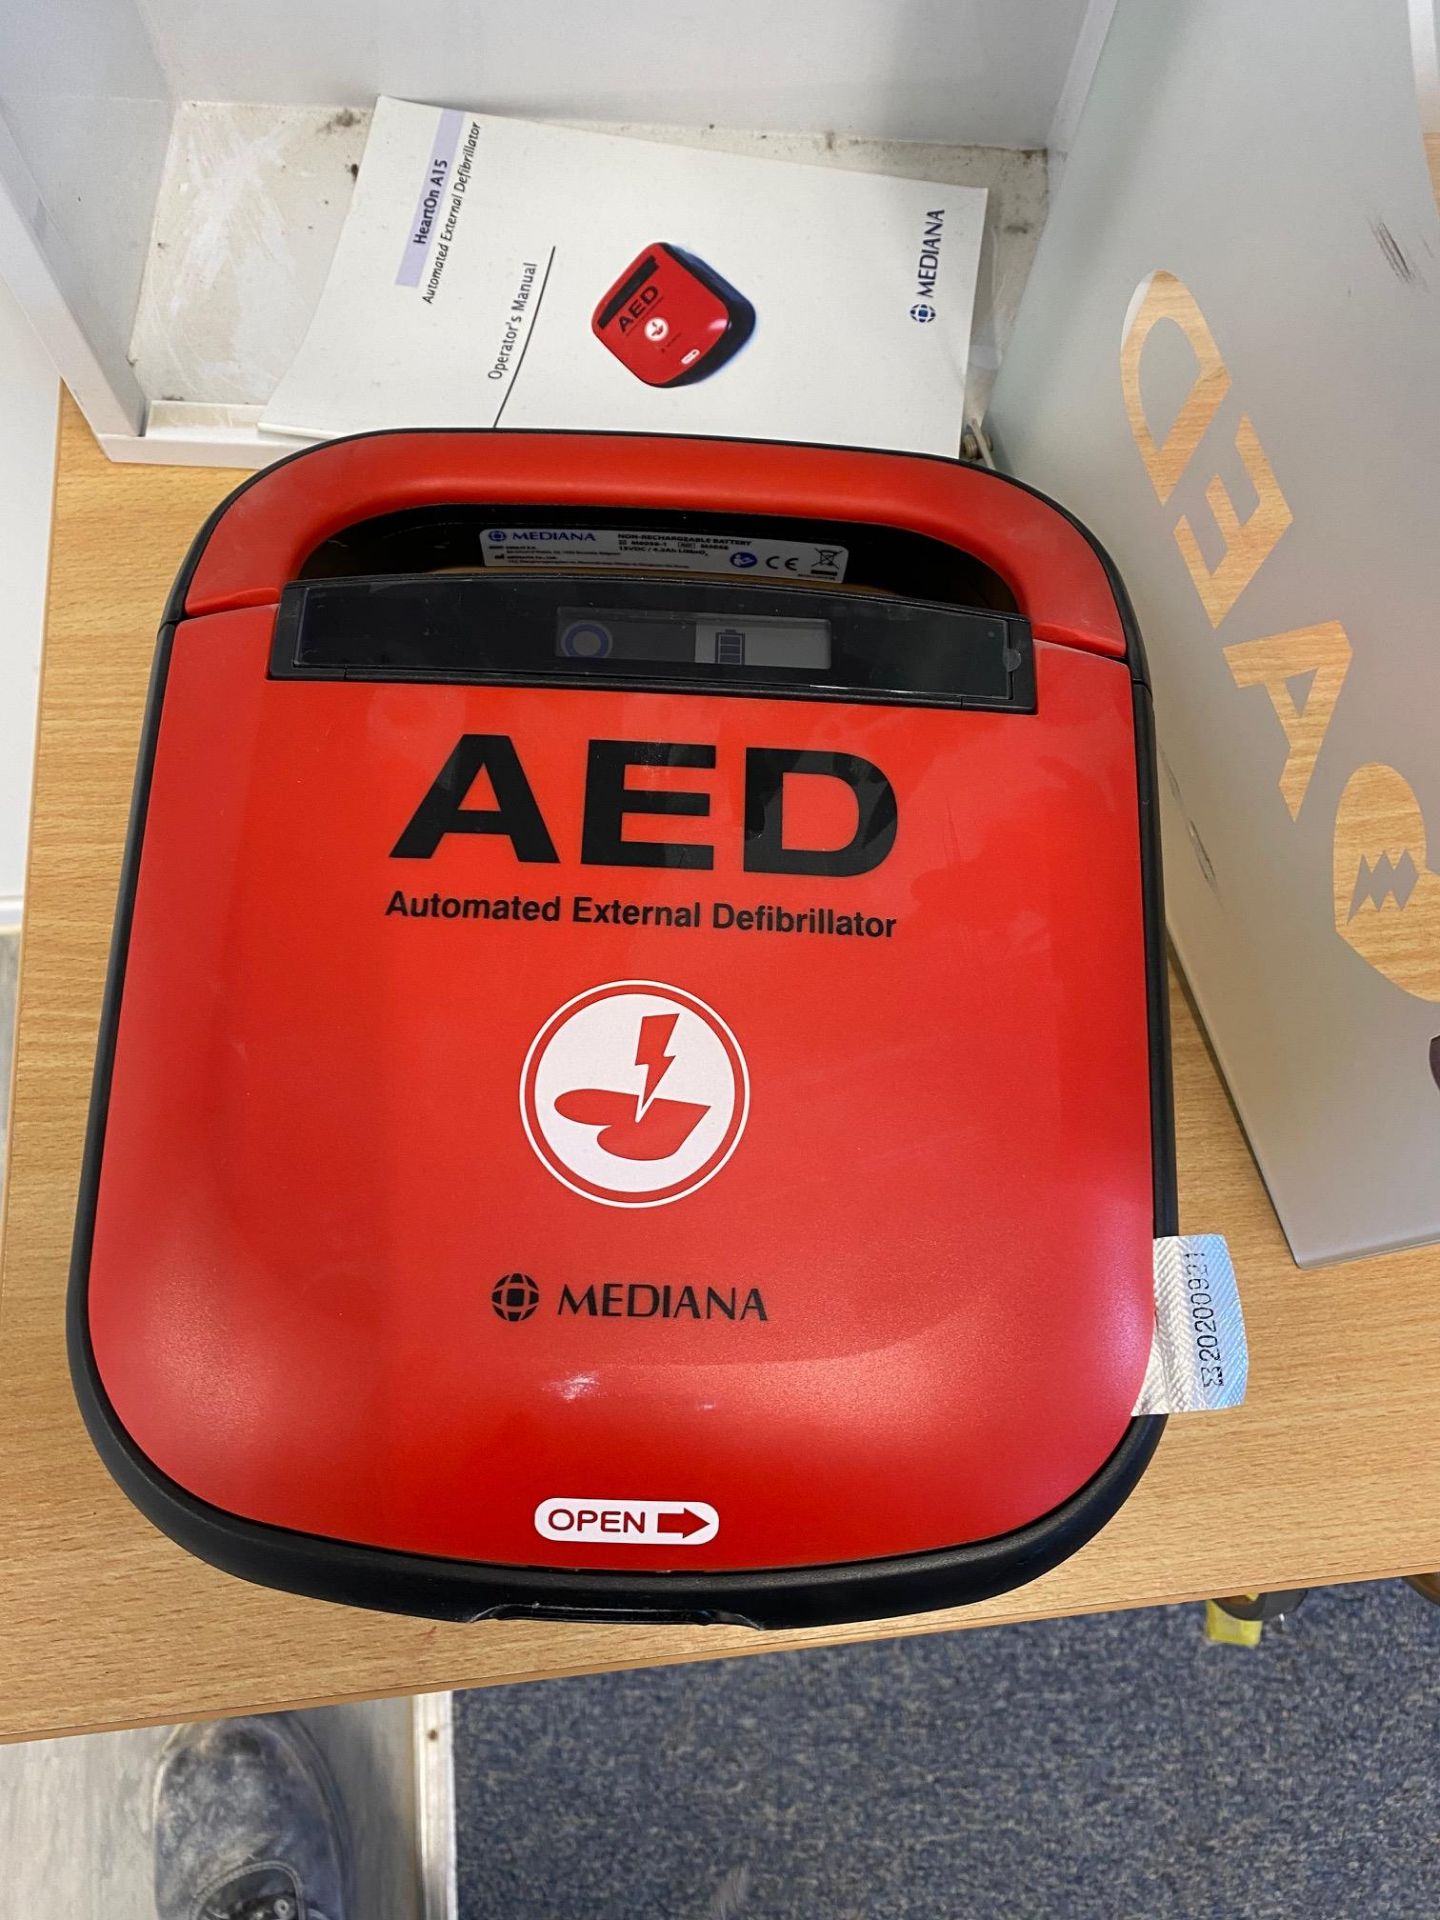 Mediana, Model: Heart A15 Automated External Defibrillator, DOM: 12/2107, Serial No. 155817/20108 (